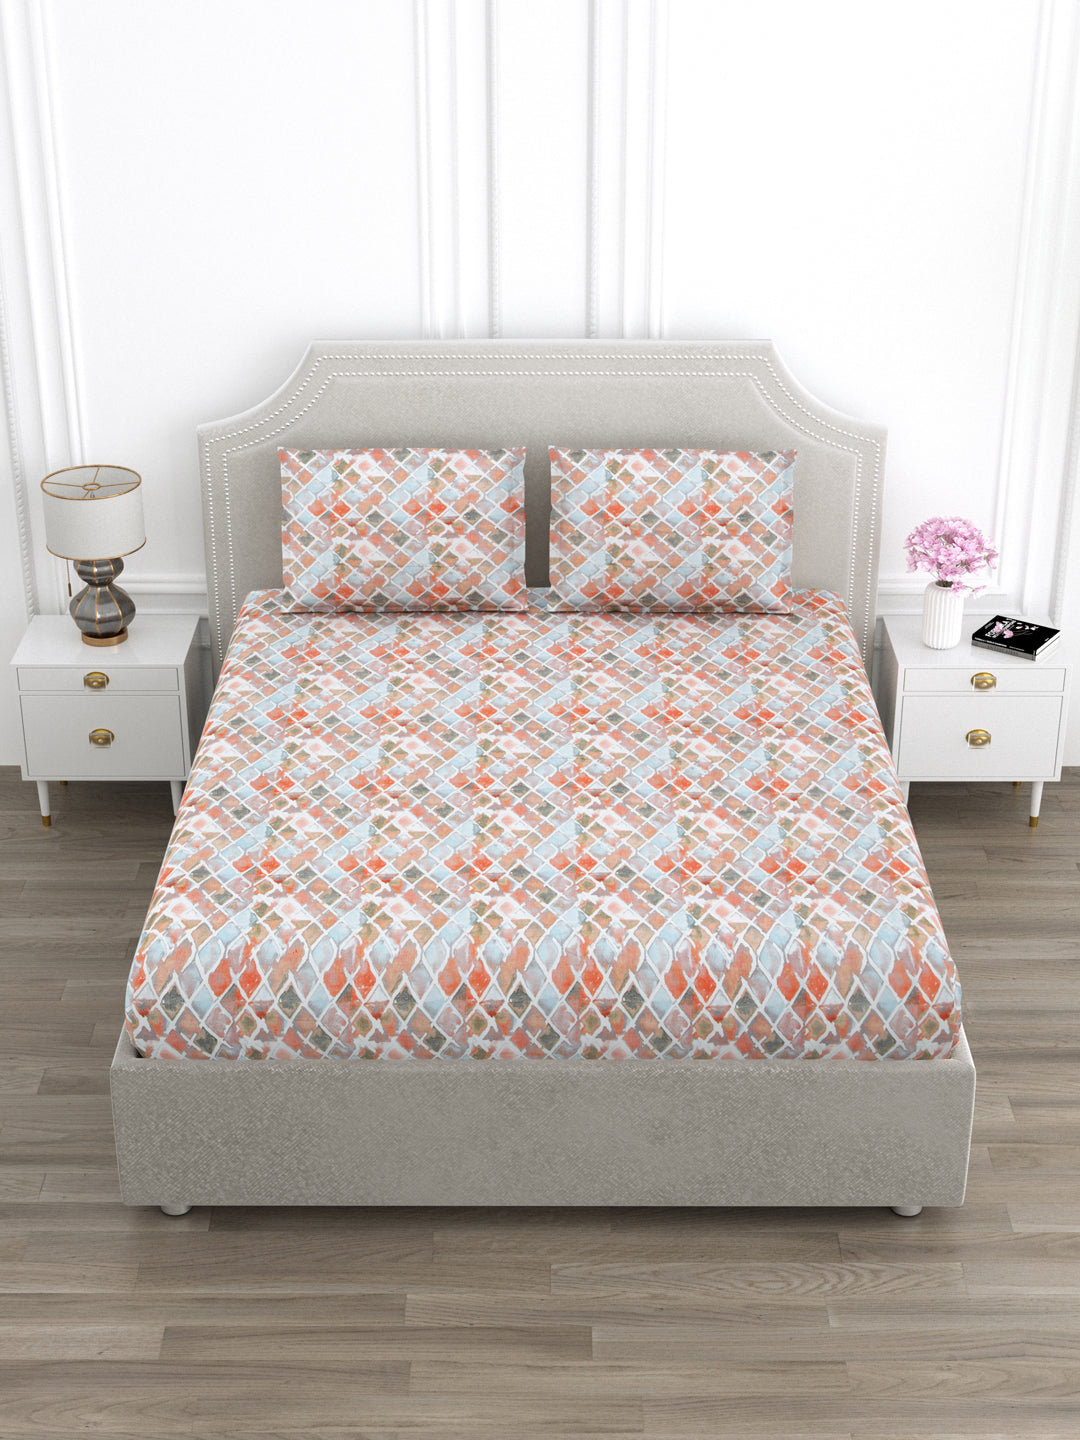 White & Orange Geometric King Size Bed Cotton Linen